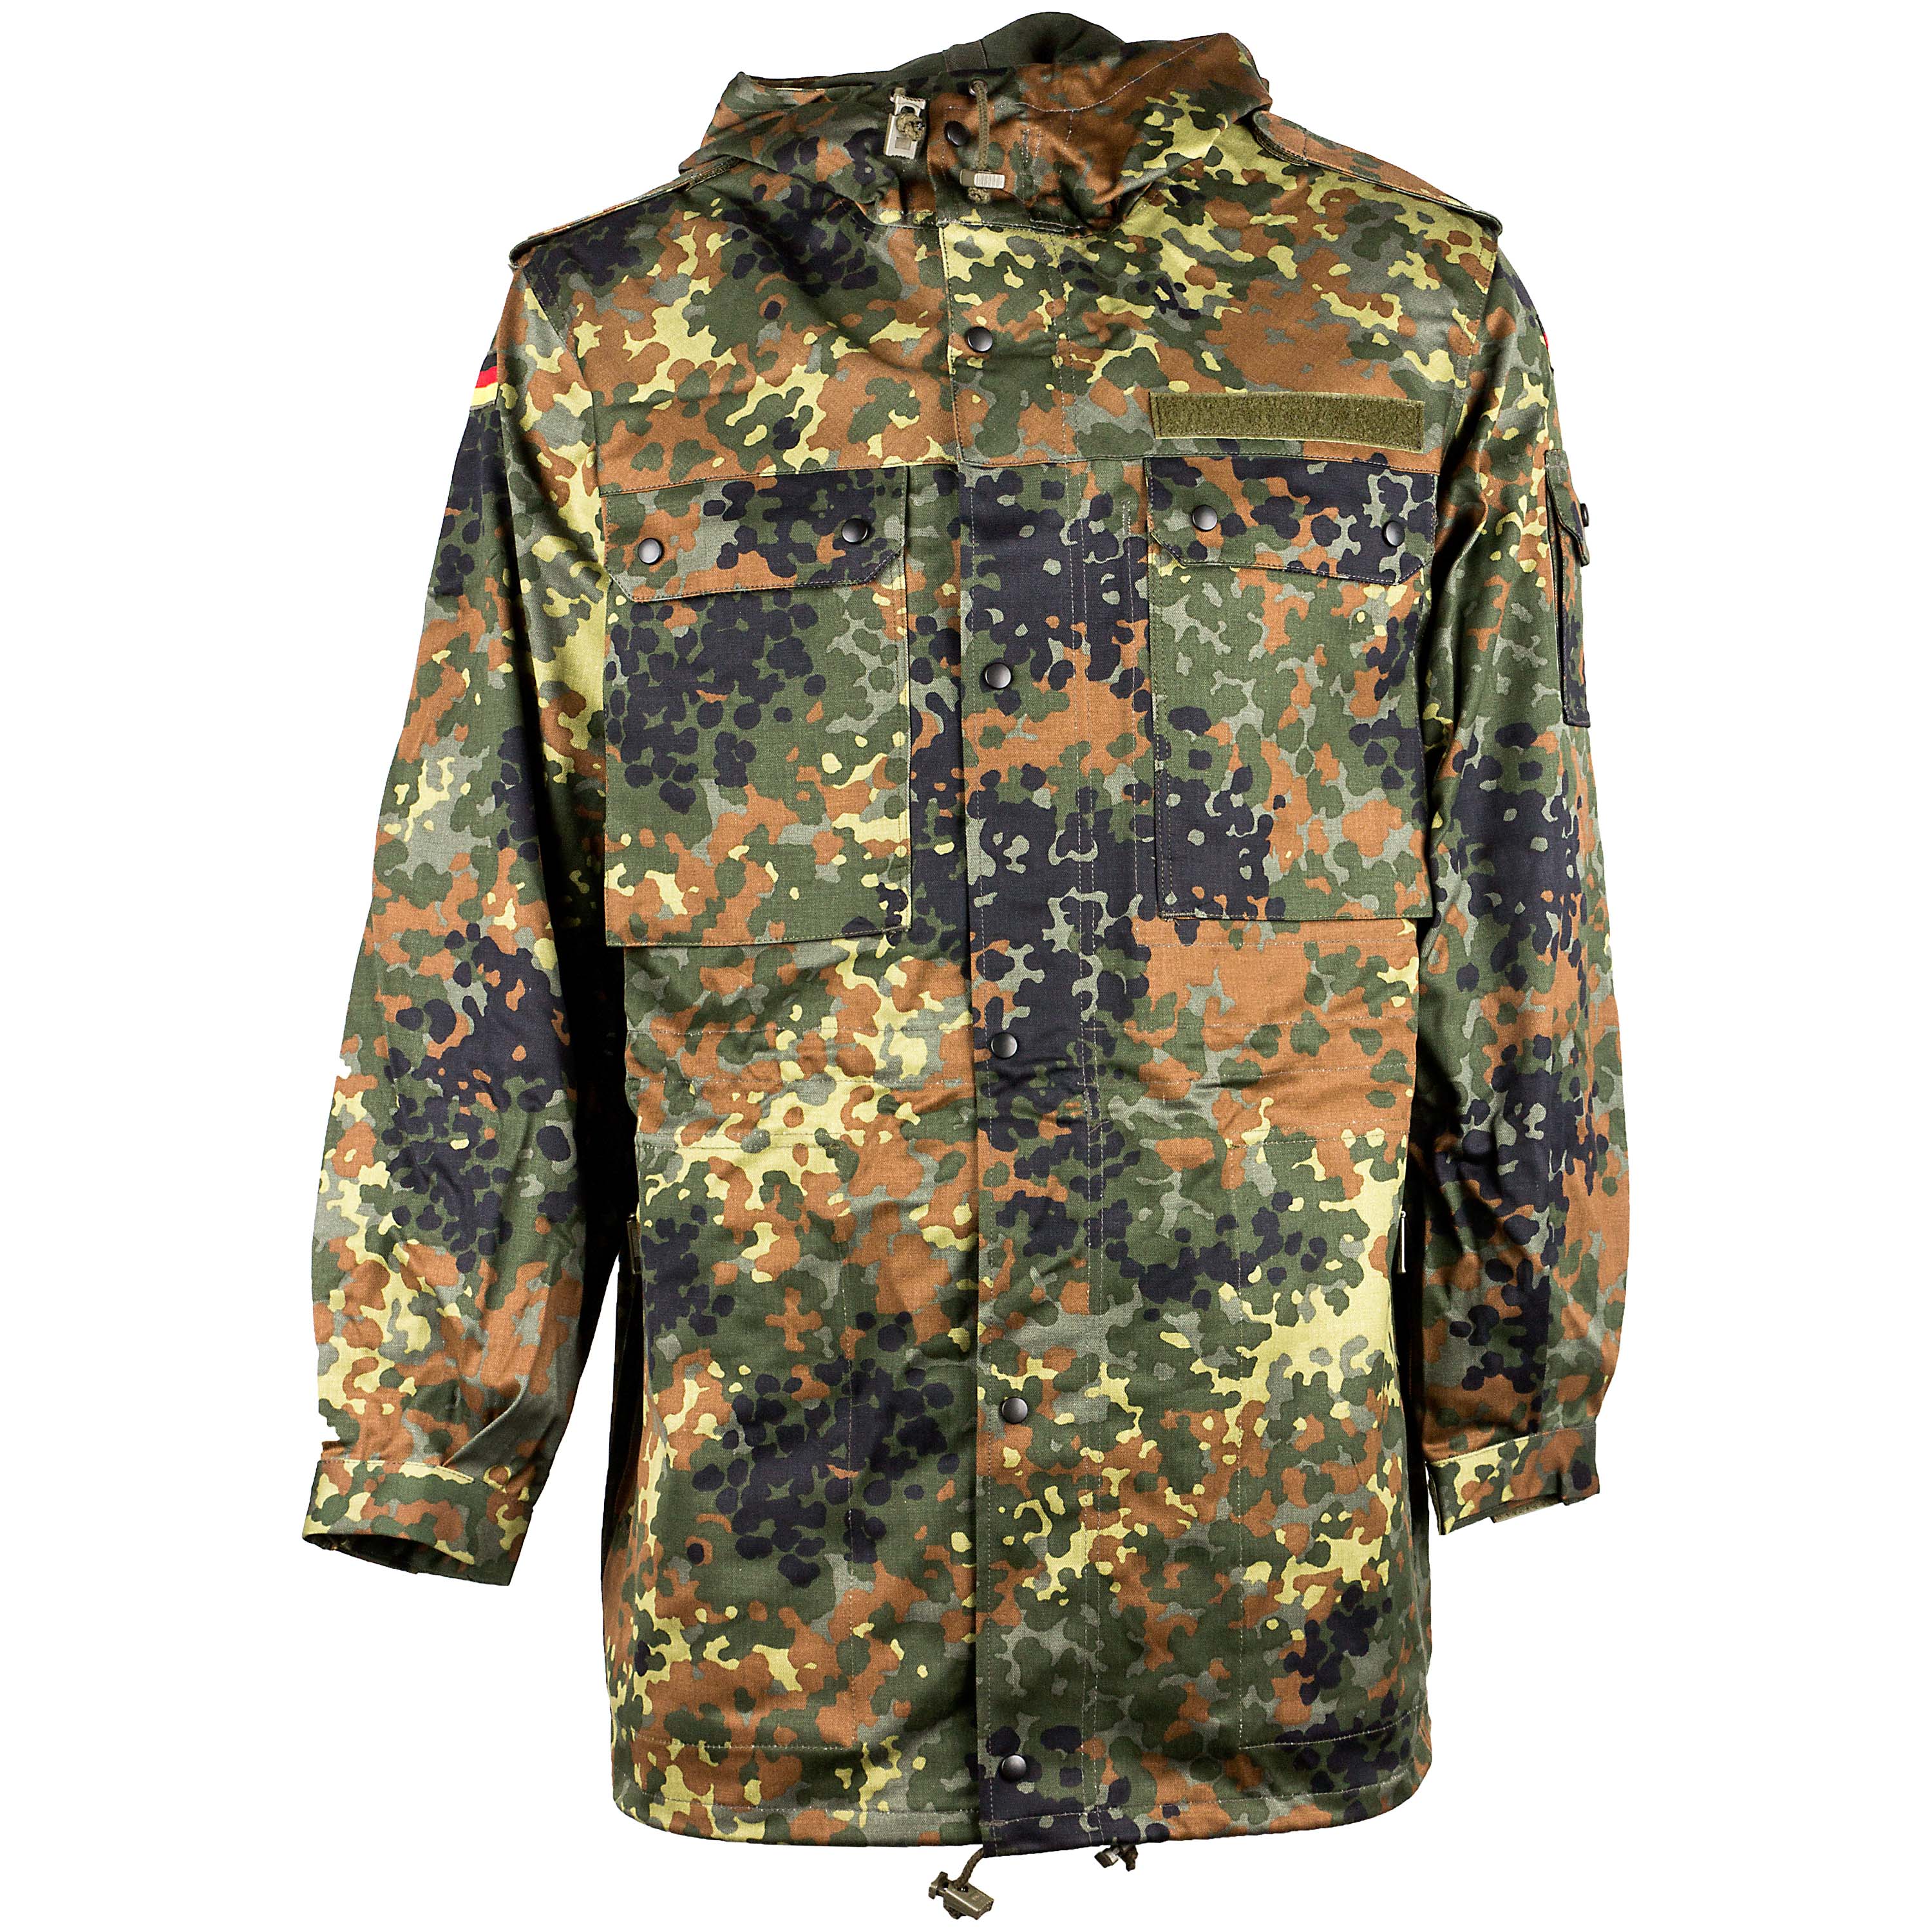 Original Issue German Army Jacket Flecktarn Camo Parka Camouflage Military Coat 